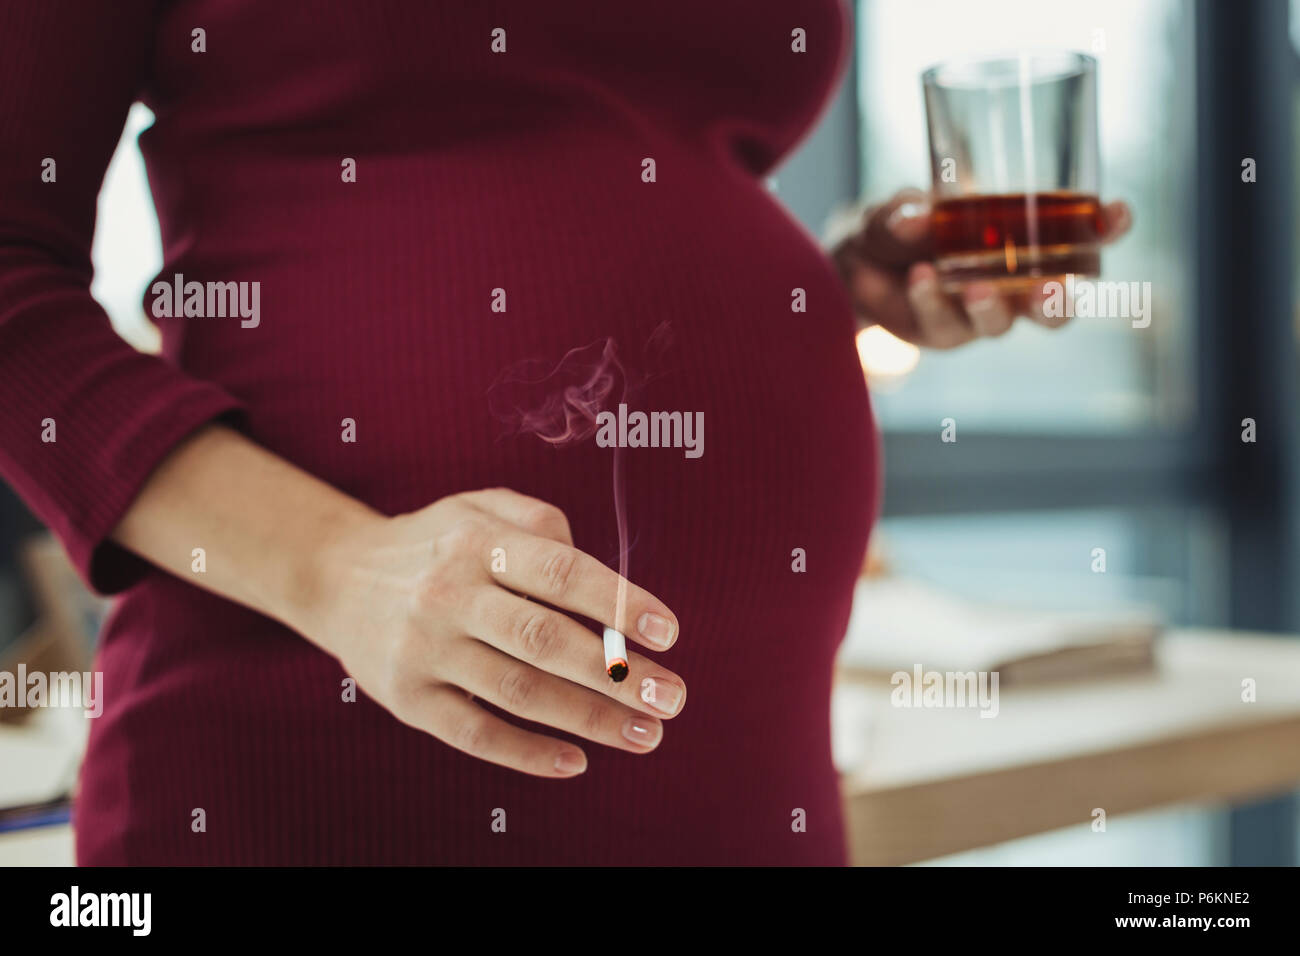 Irresponsible pregnant woman smoking and drinking alcohol Stock Photo